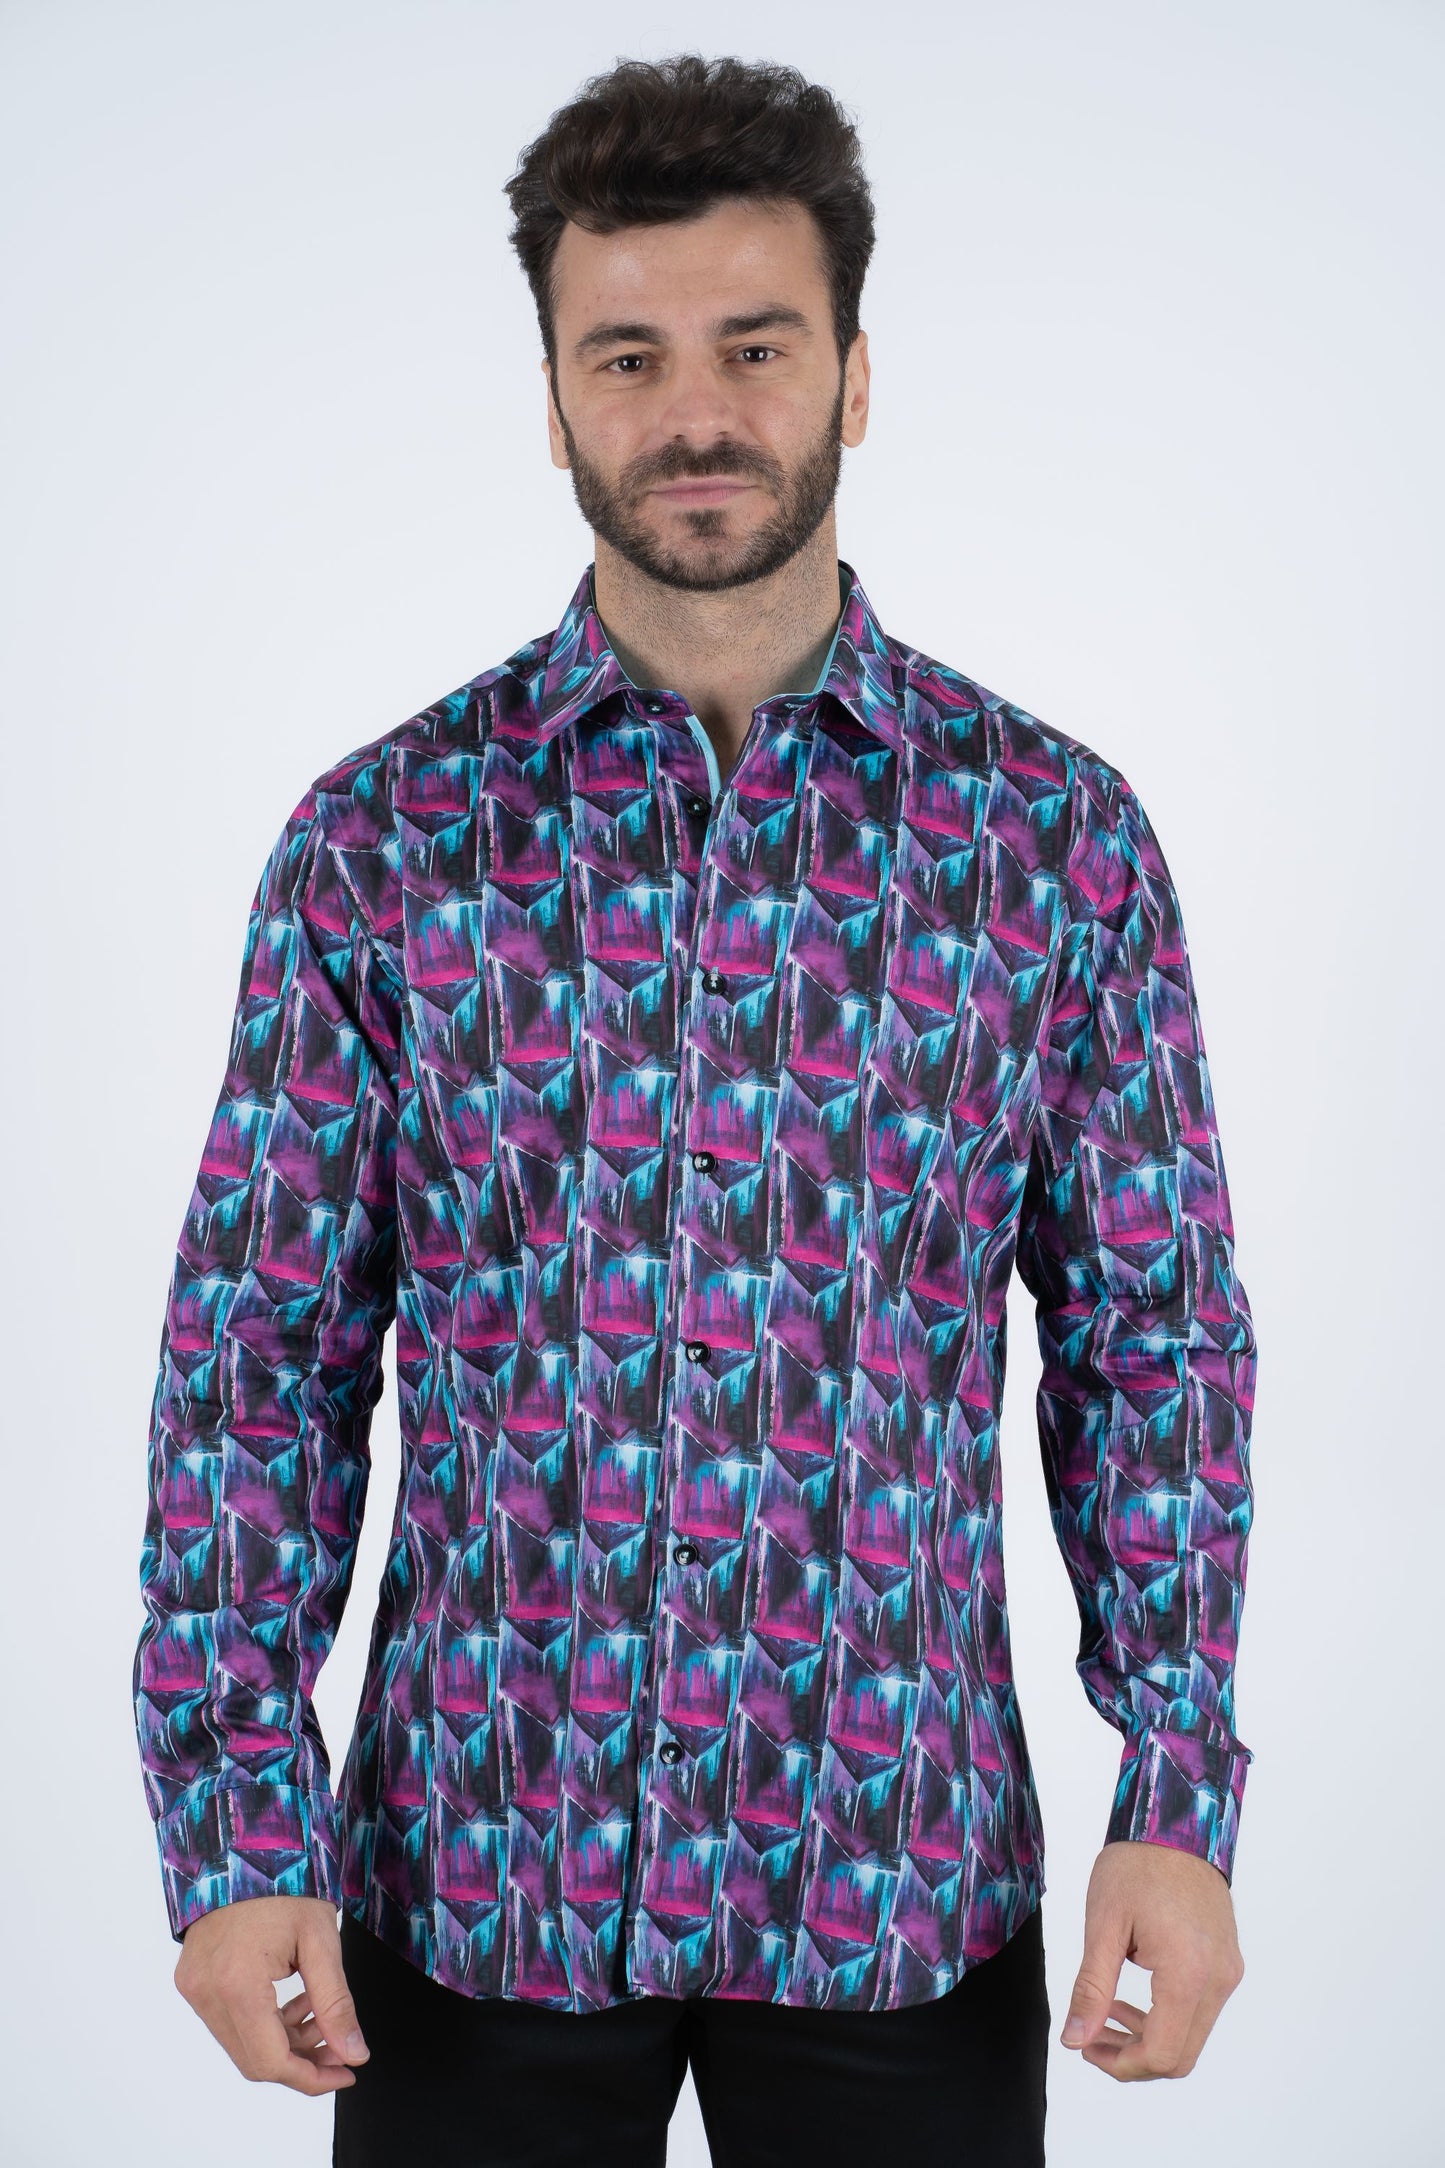 Purple Rings Print Satin Cotton/Spandex Long Sleeve Shirt